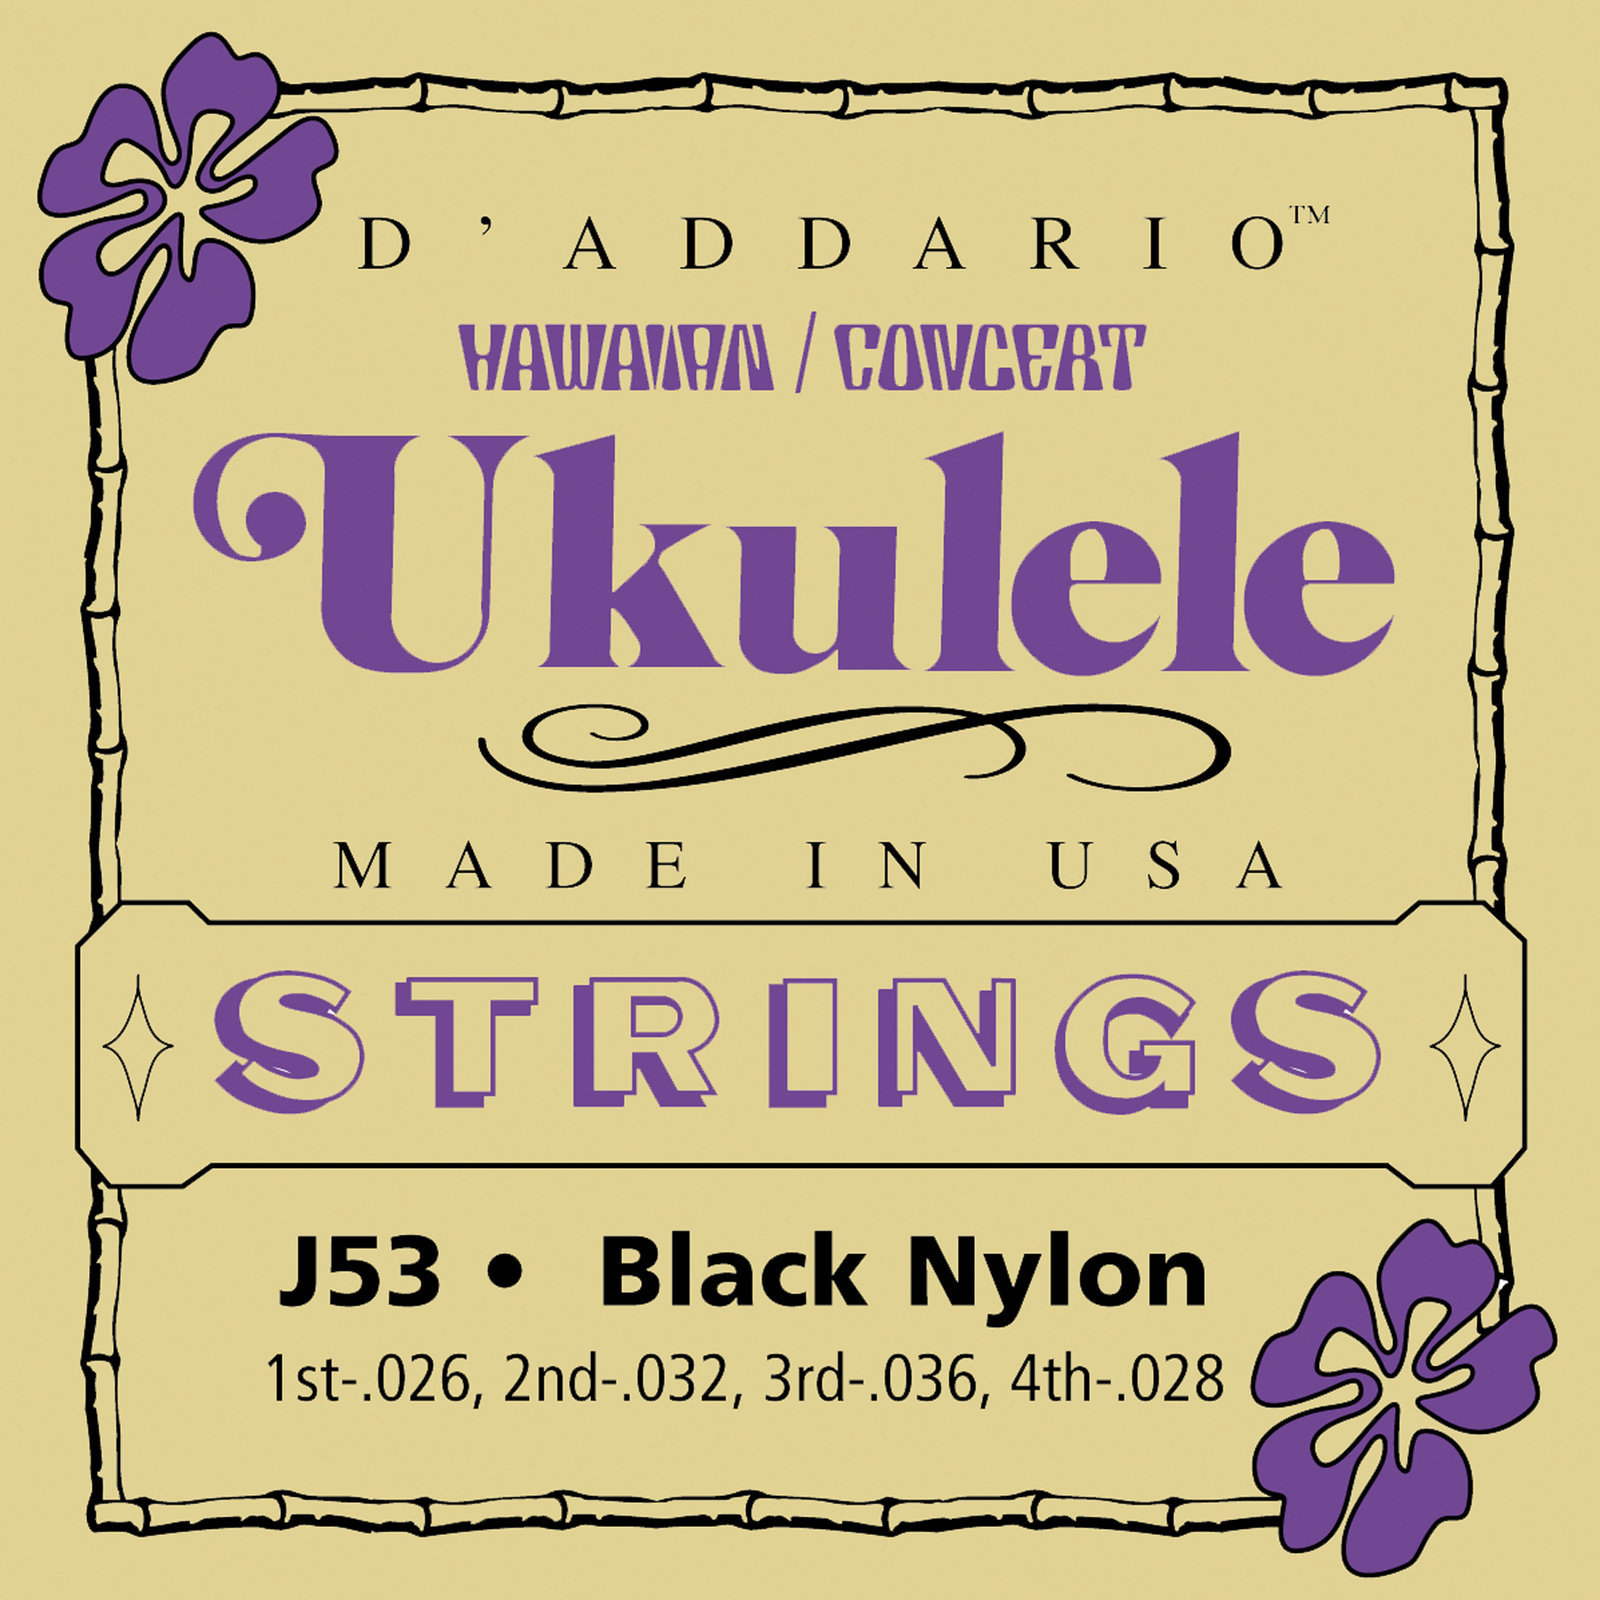 Cordas para ukulele de concerto D'Addario J53 Ukulele 4-Nylon Strings Black